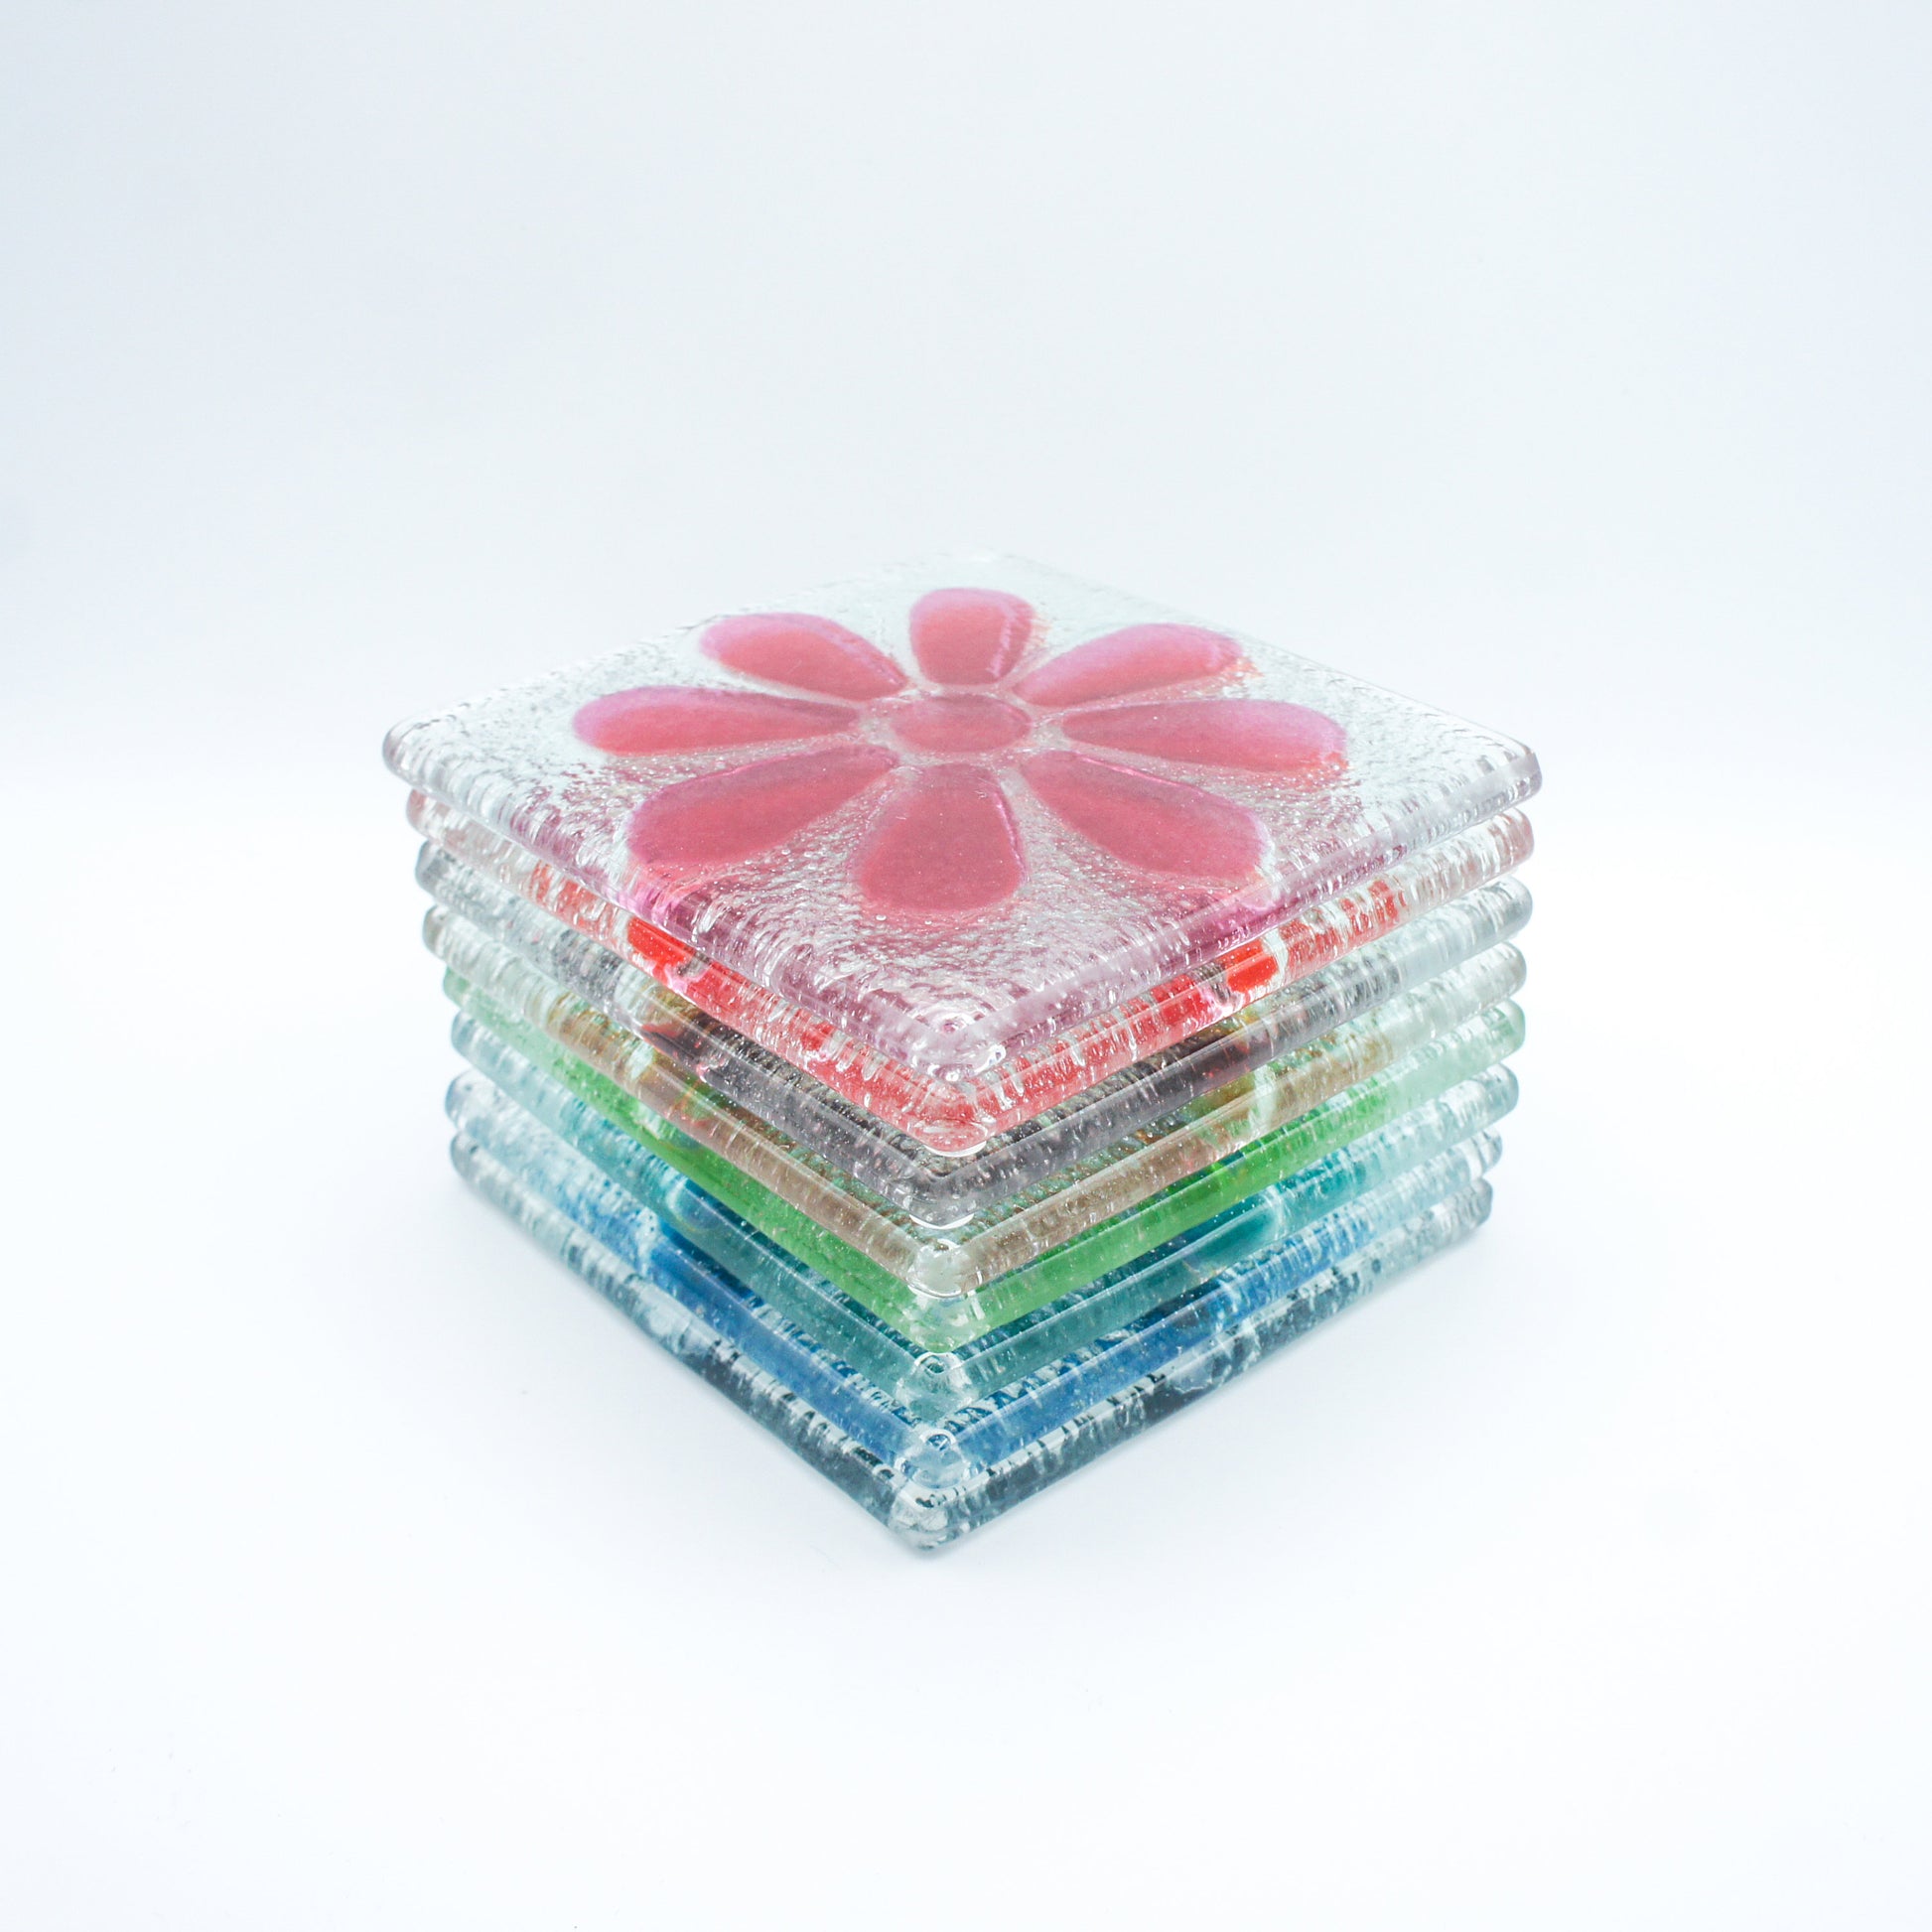 4 Daisy Coasters 10x10cm(4x4"), Choose colours, fused glass flower coasters, sea glass daisy coasters, matt adkins